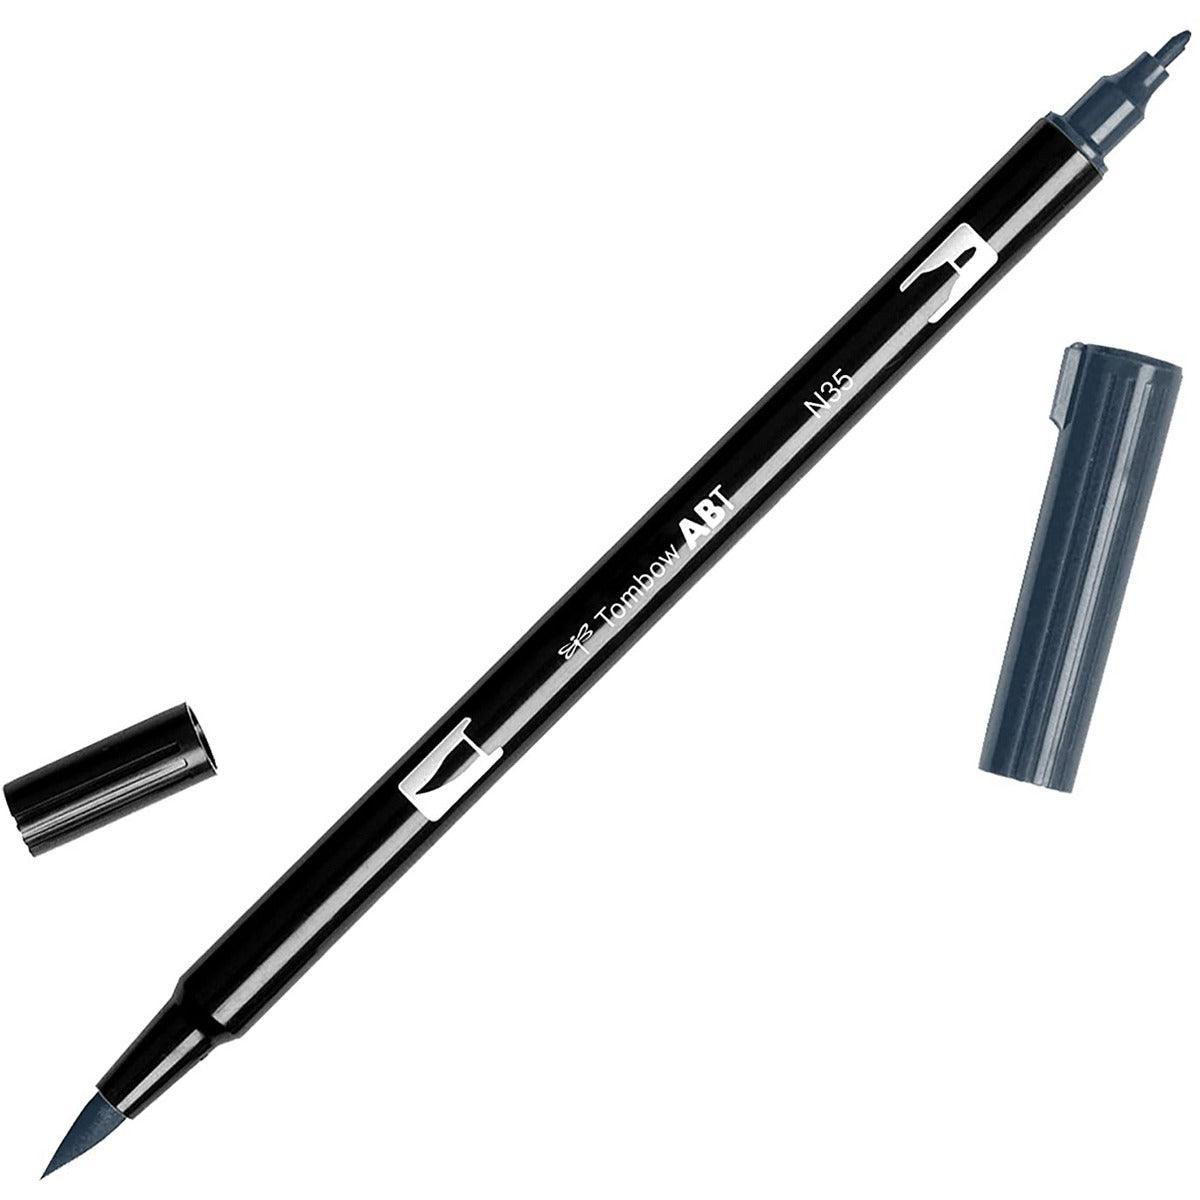 ABT Dual Brush Pen N35 im Outlet Sale